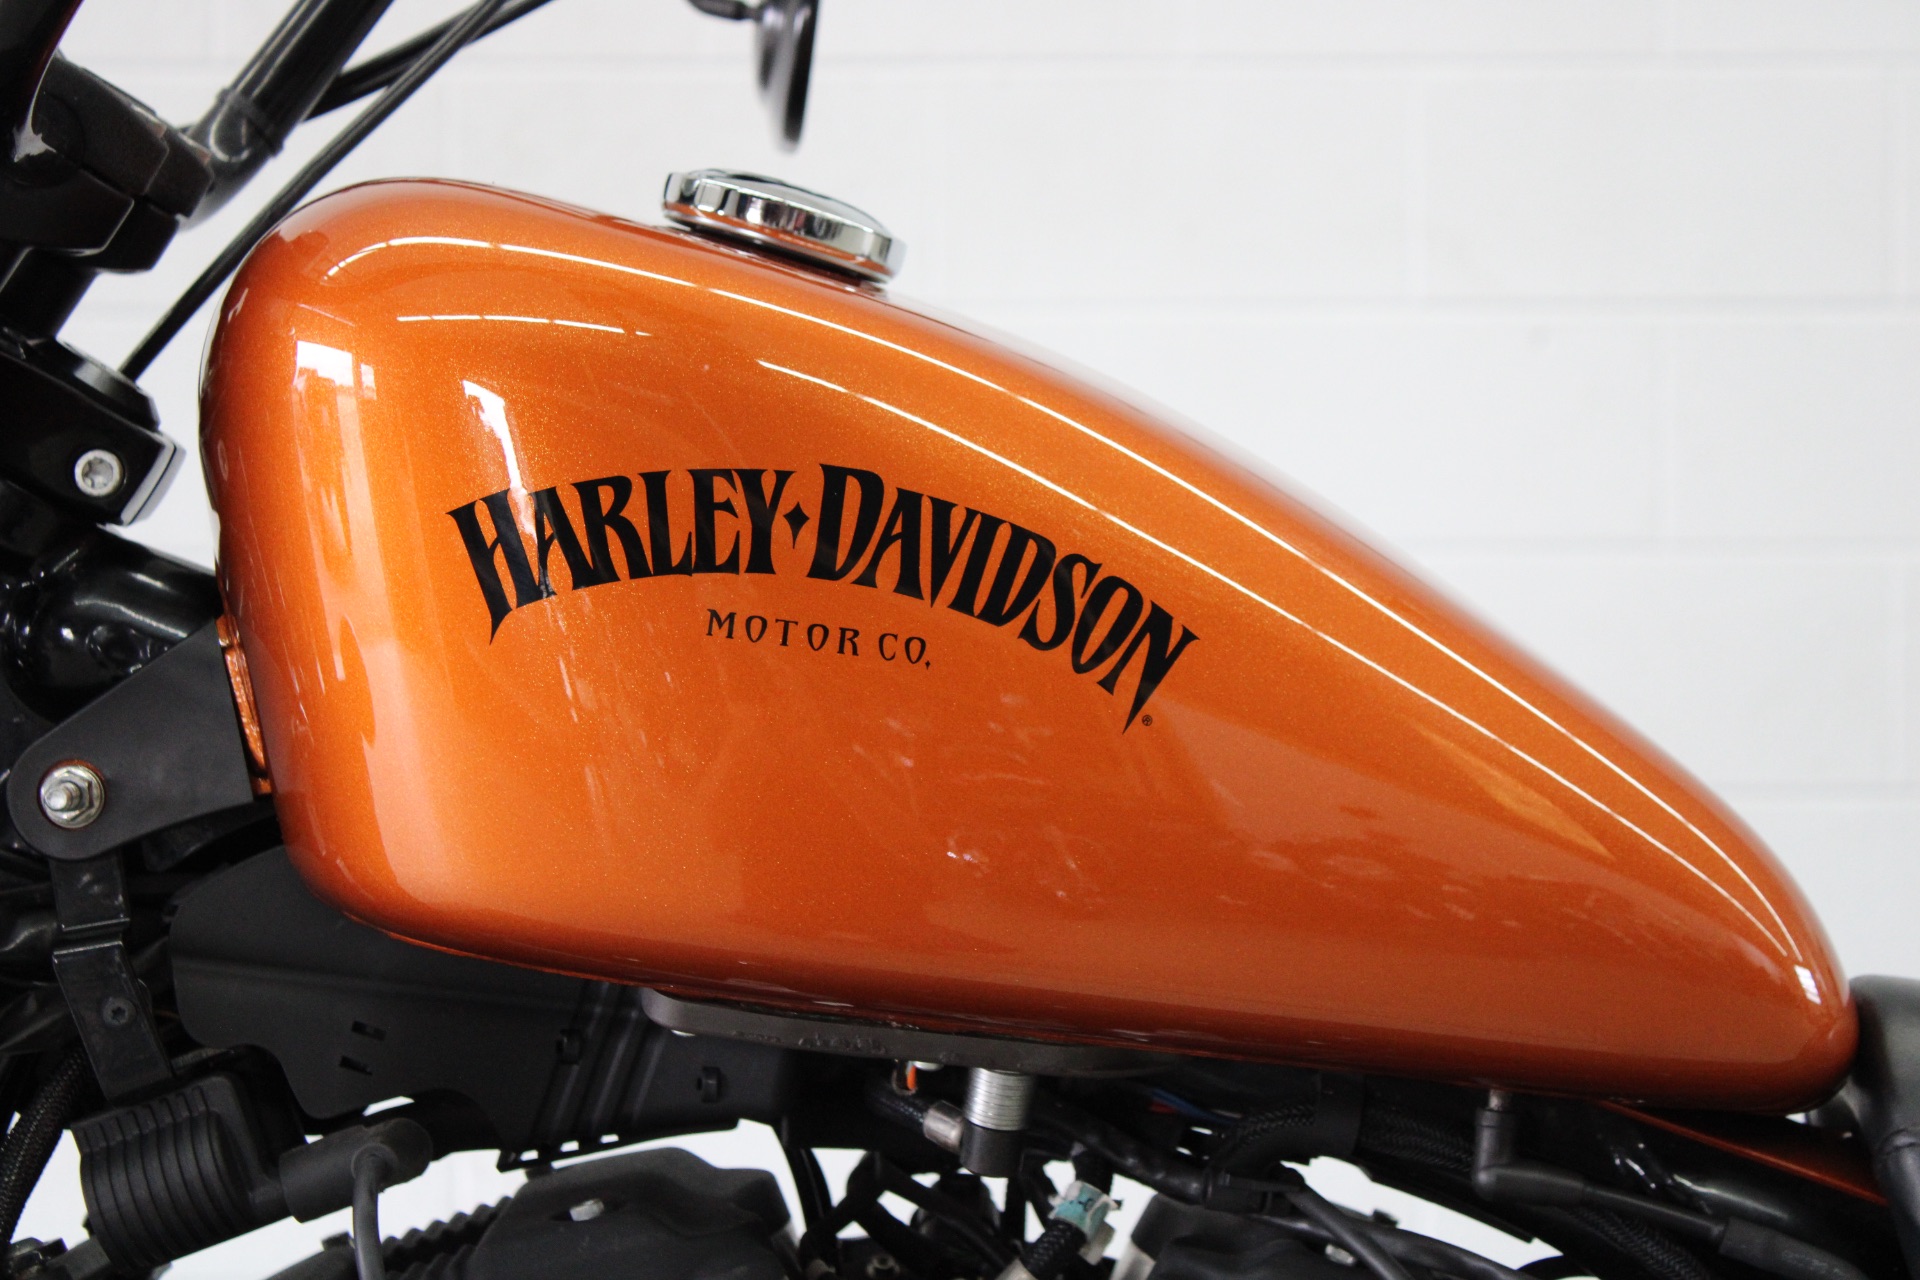 2014 Harley-Davidson Sportster® Iron 883™ in Fredericksburg, Virginia - Photo 18